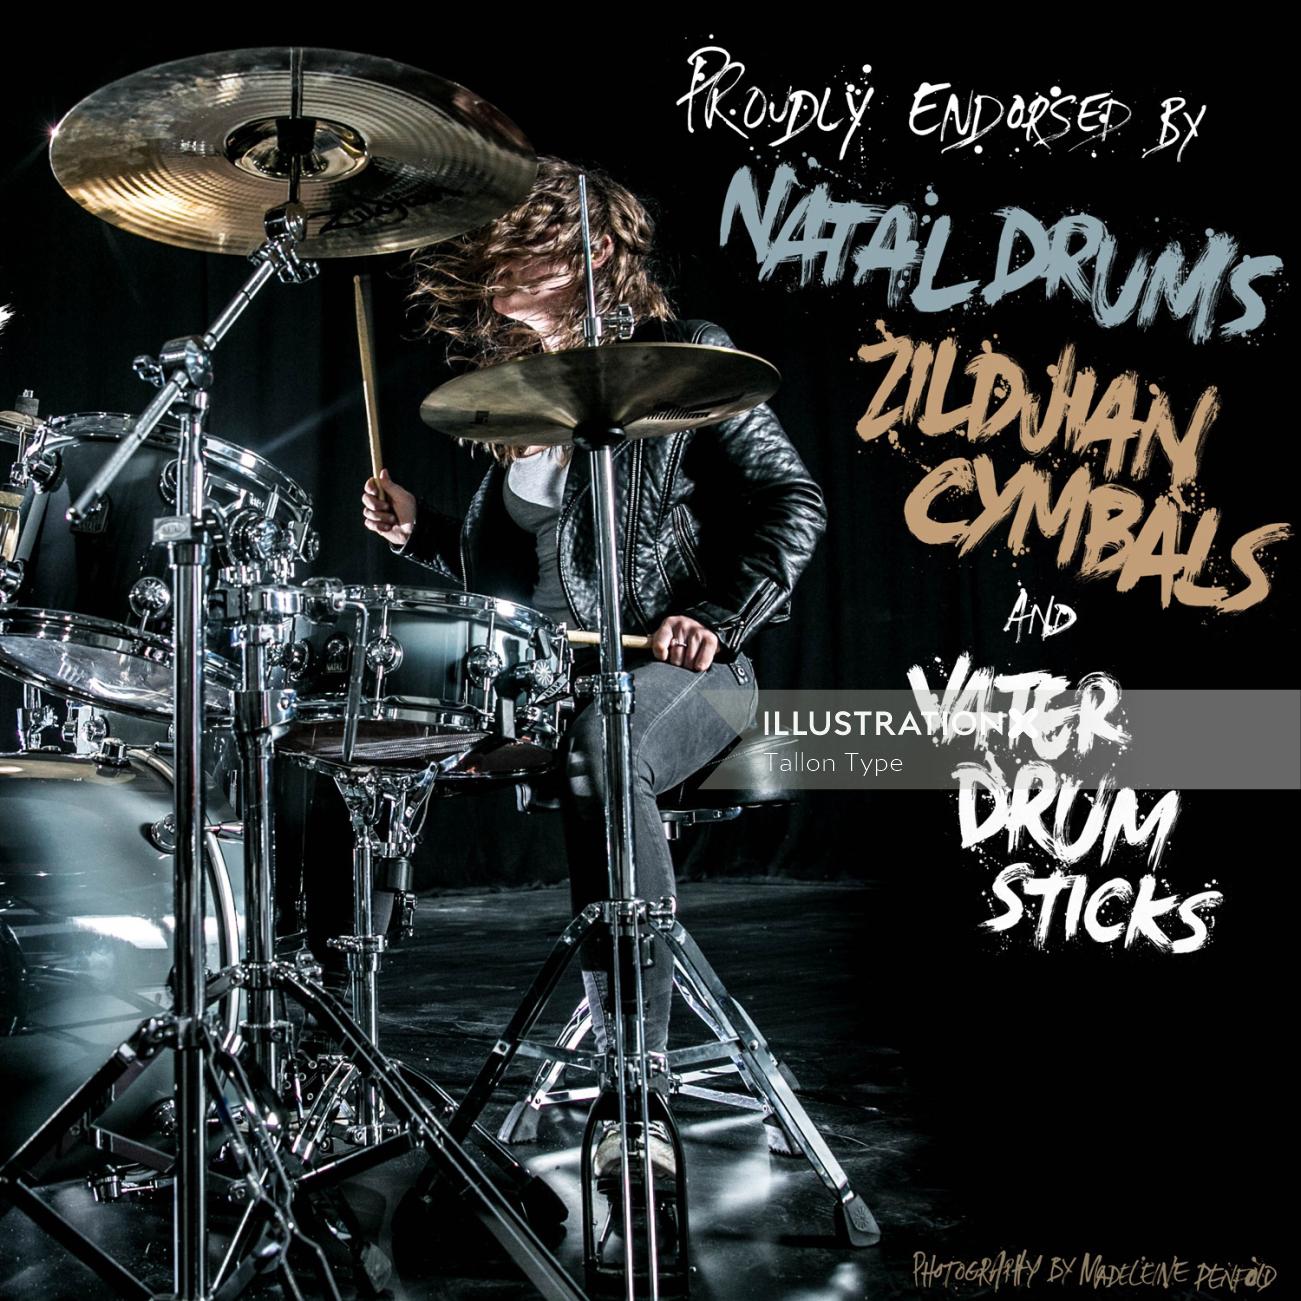 Graphic drummer natal drums
